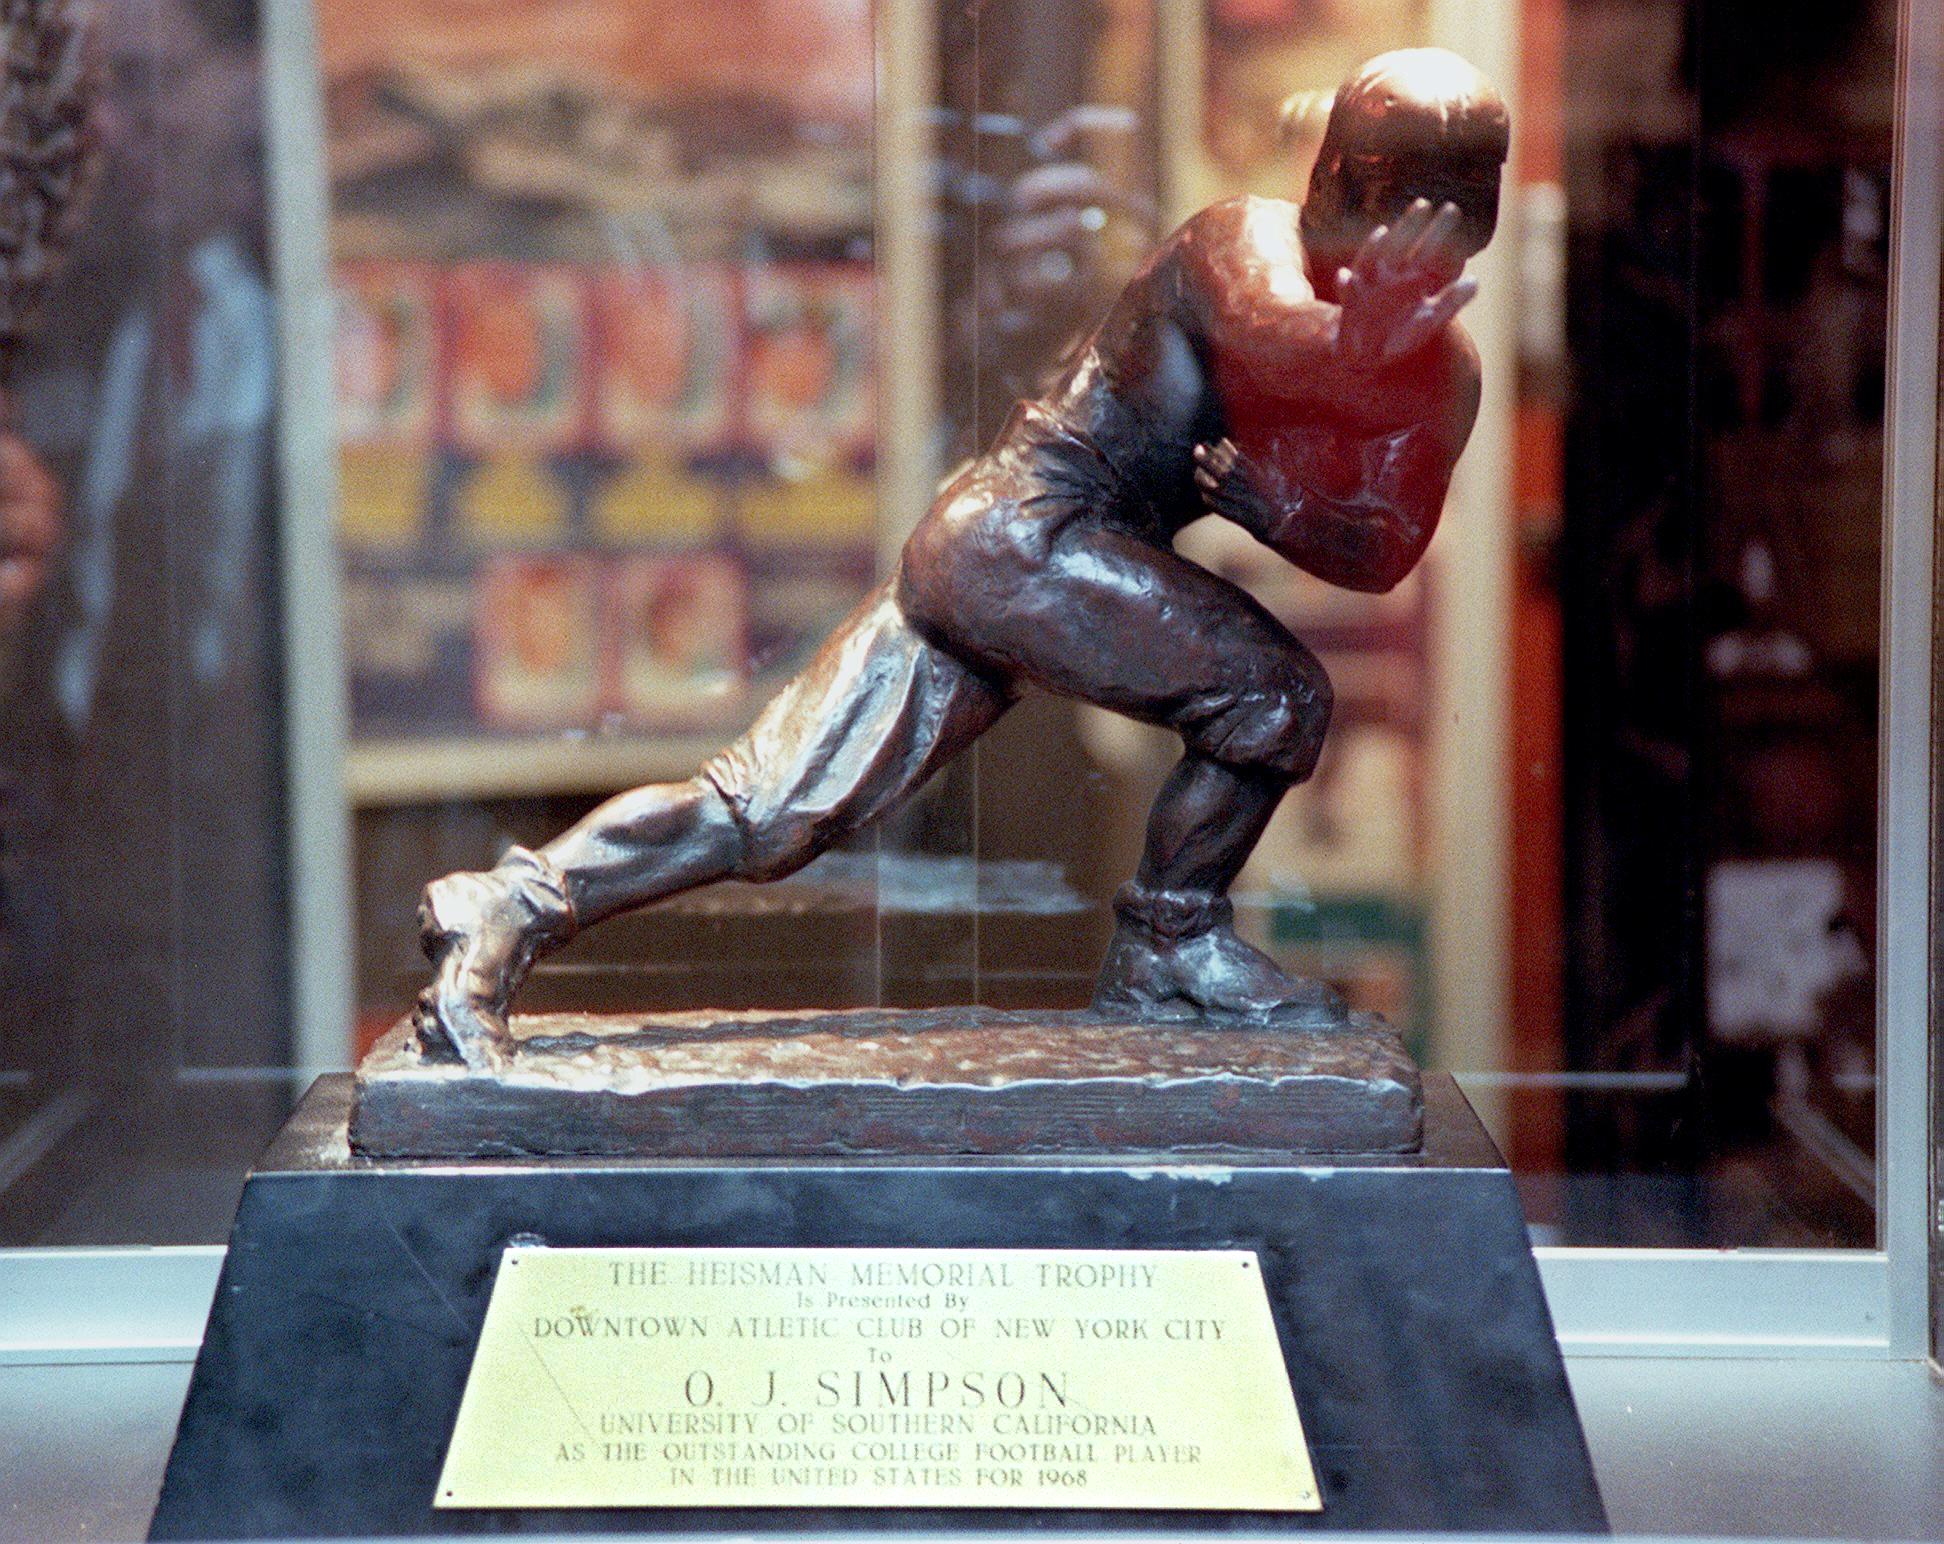 The Heisman Memorial Trophy Award that was present